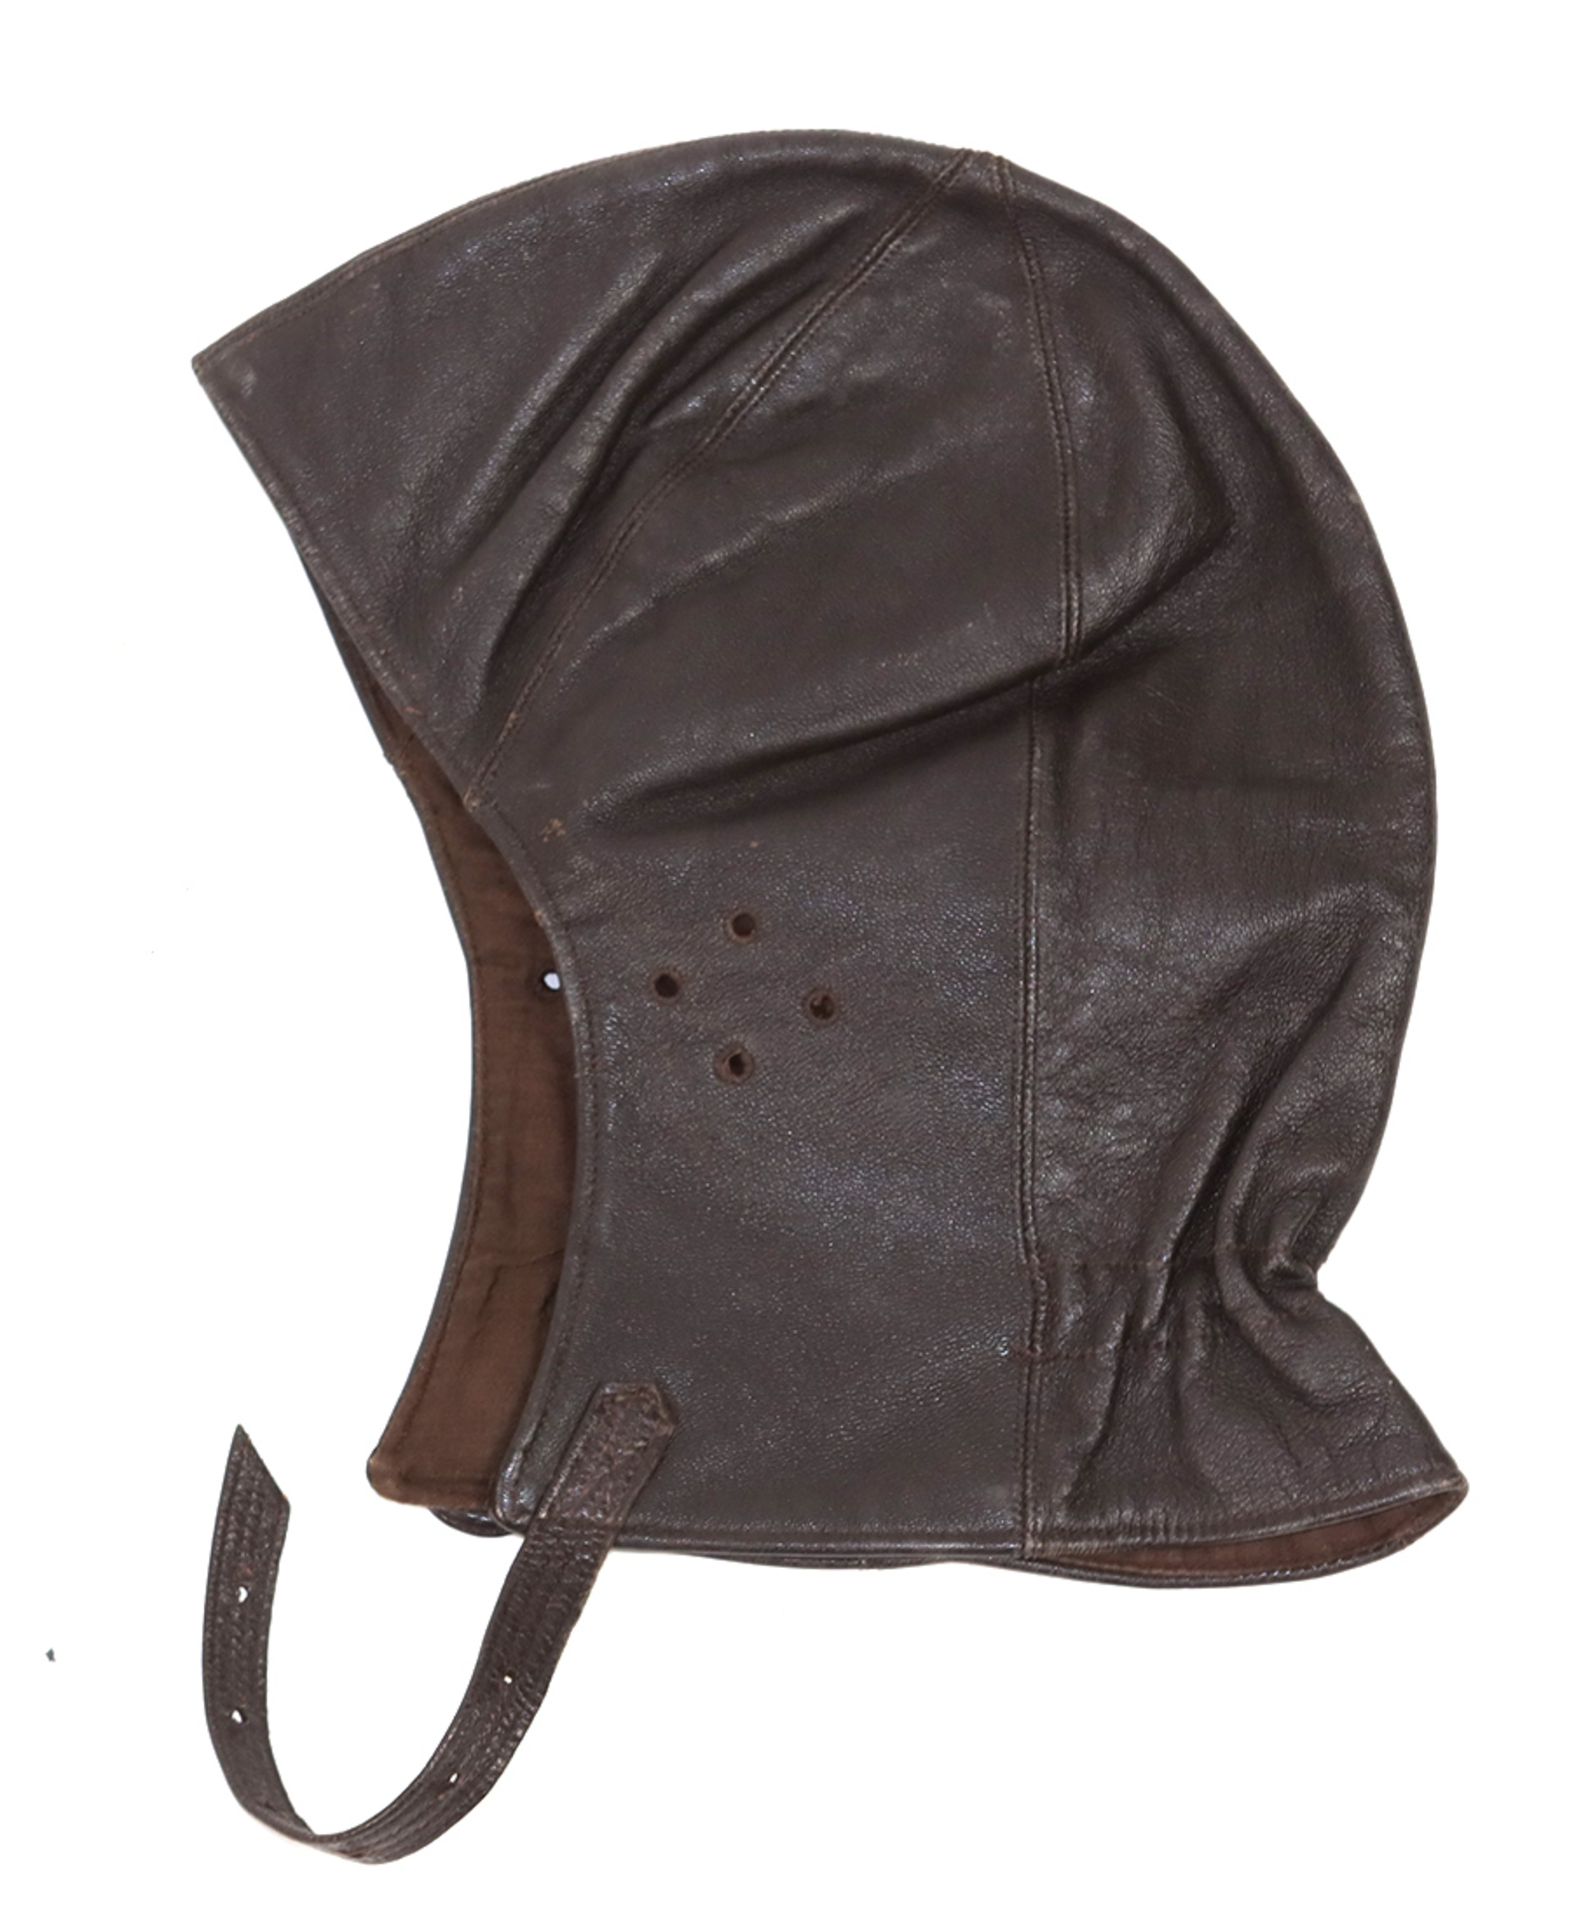 Leder Kappe 1920er Jahredunkelbraunes Leder, enganliegende Kappe mit Gummizug im nacken,